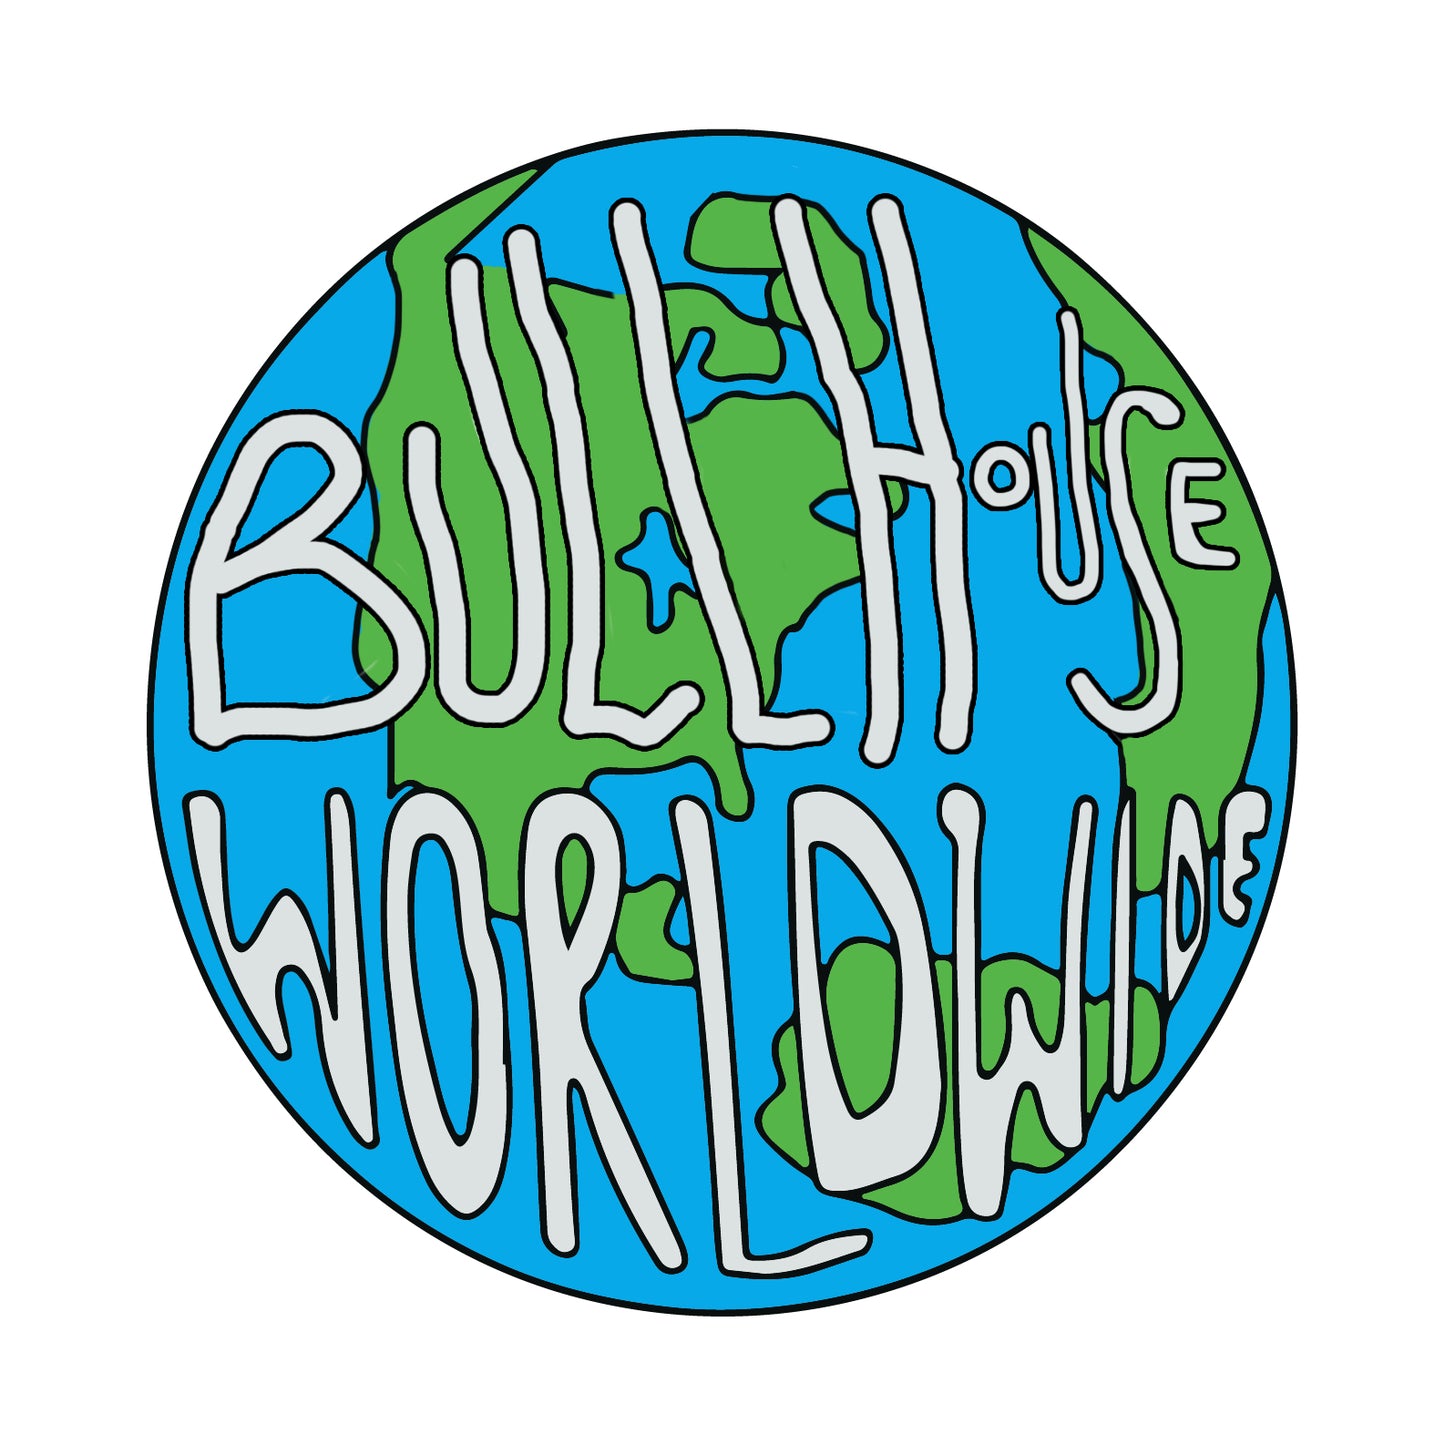 Bullhouse Worldwide